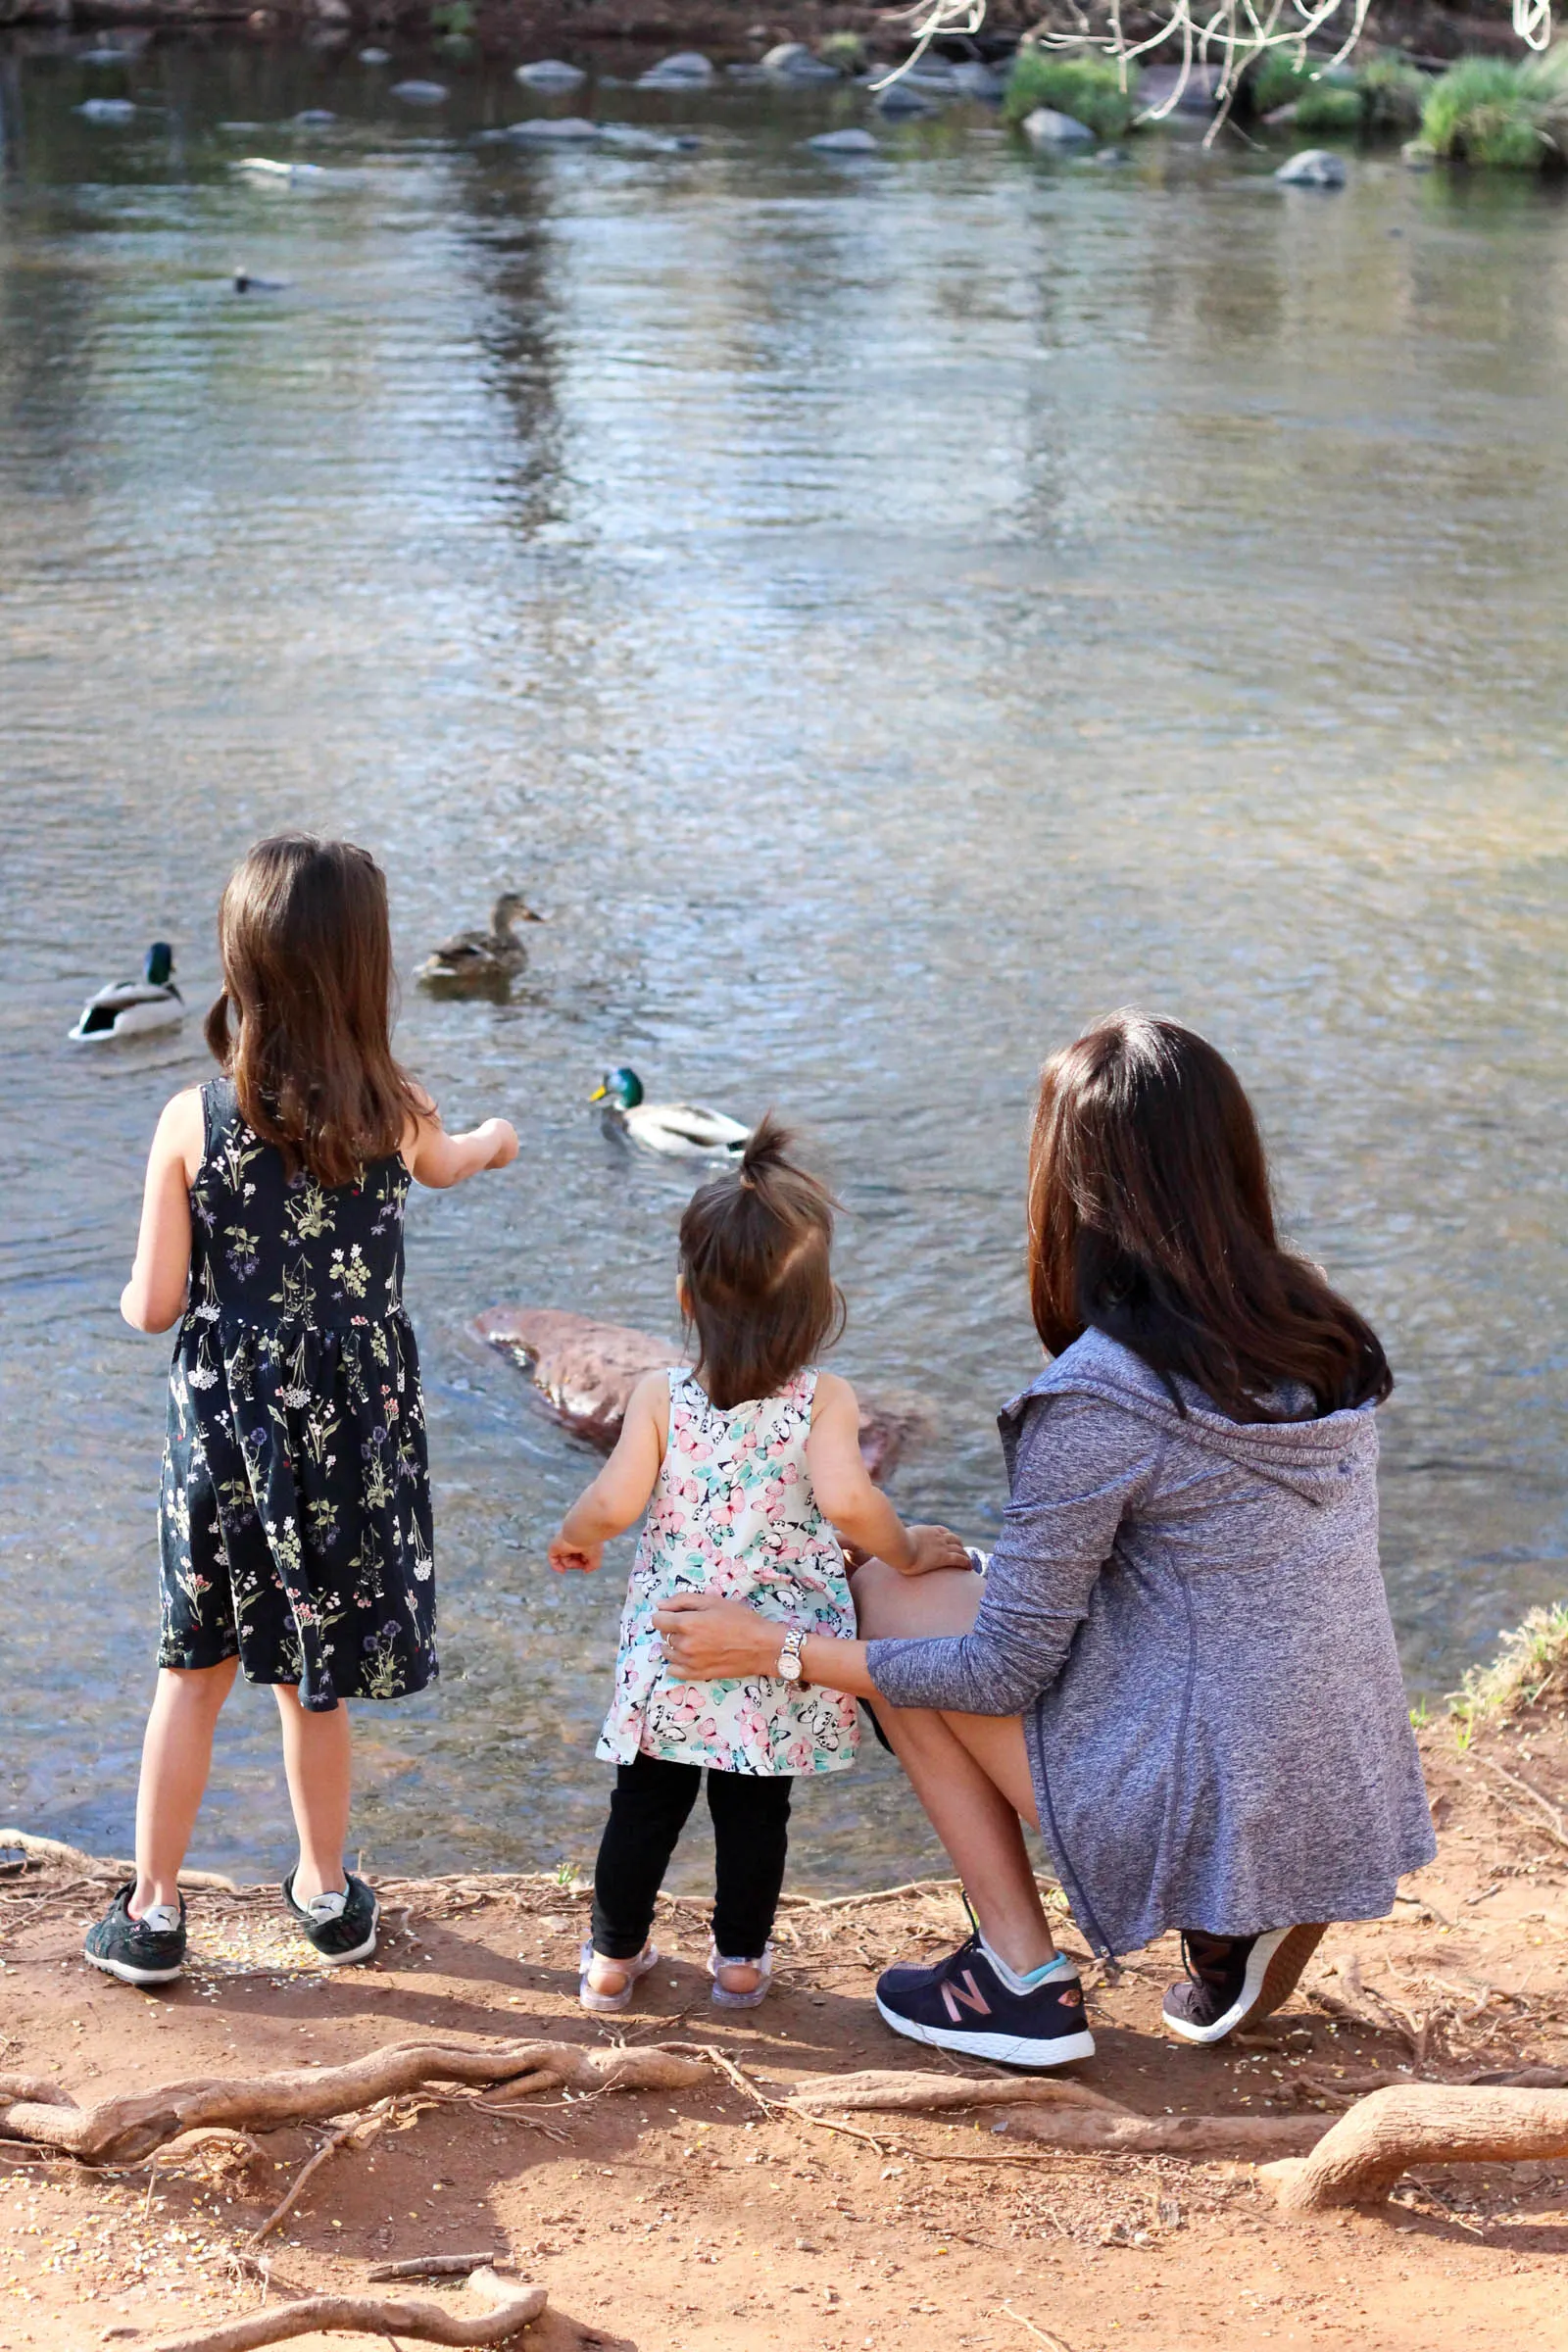 The girls and me feeding ducks at L’Auberge de Sedona